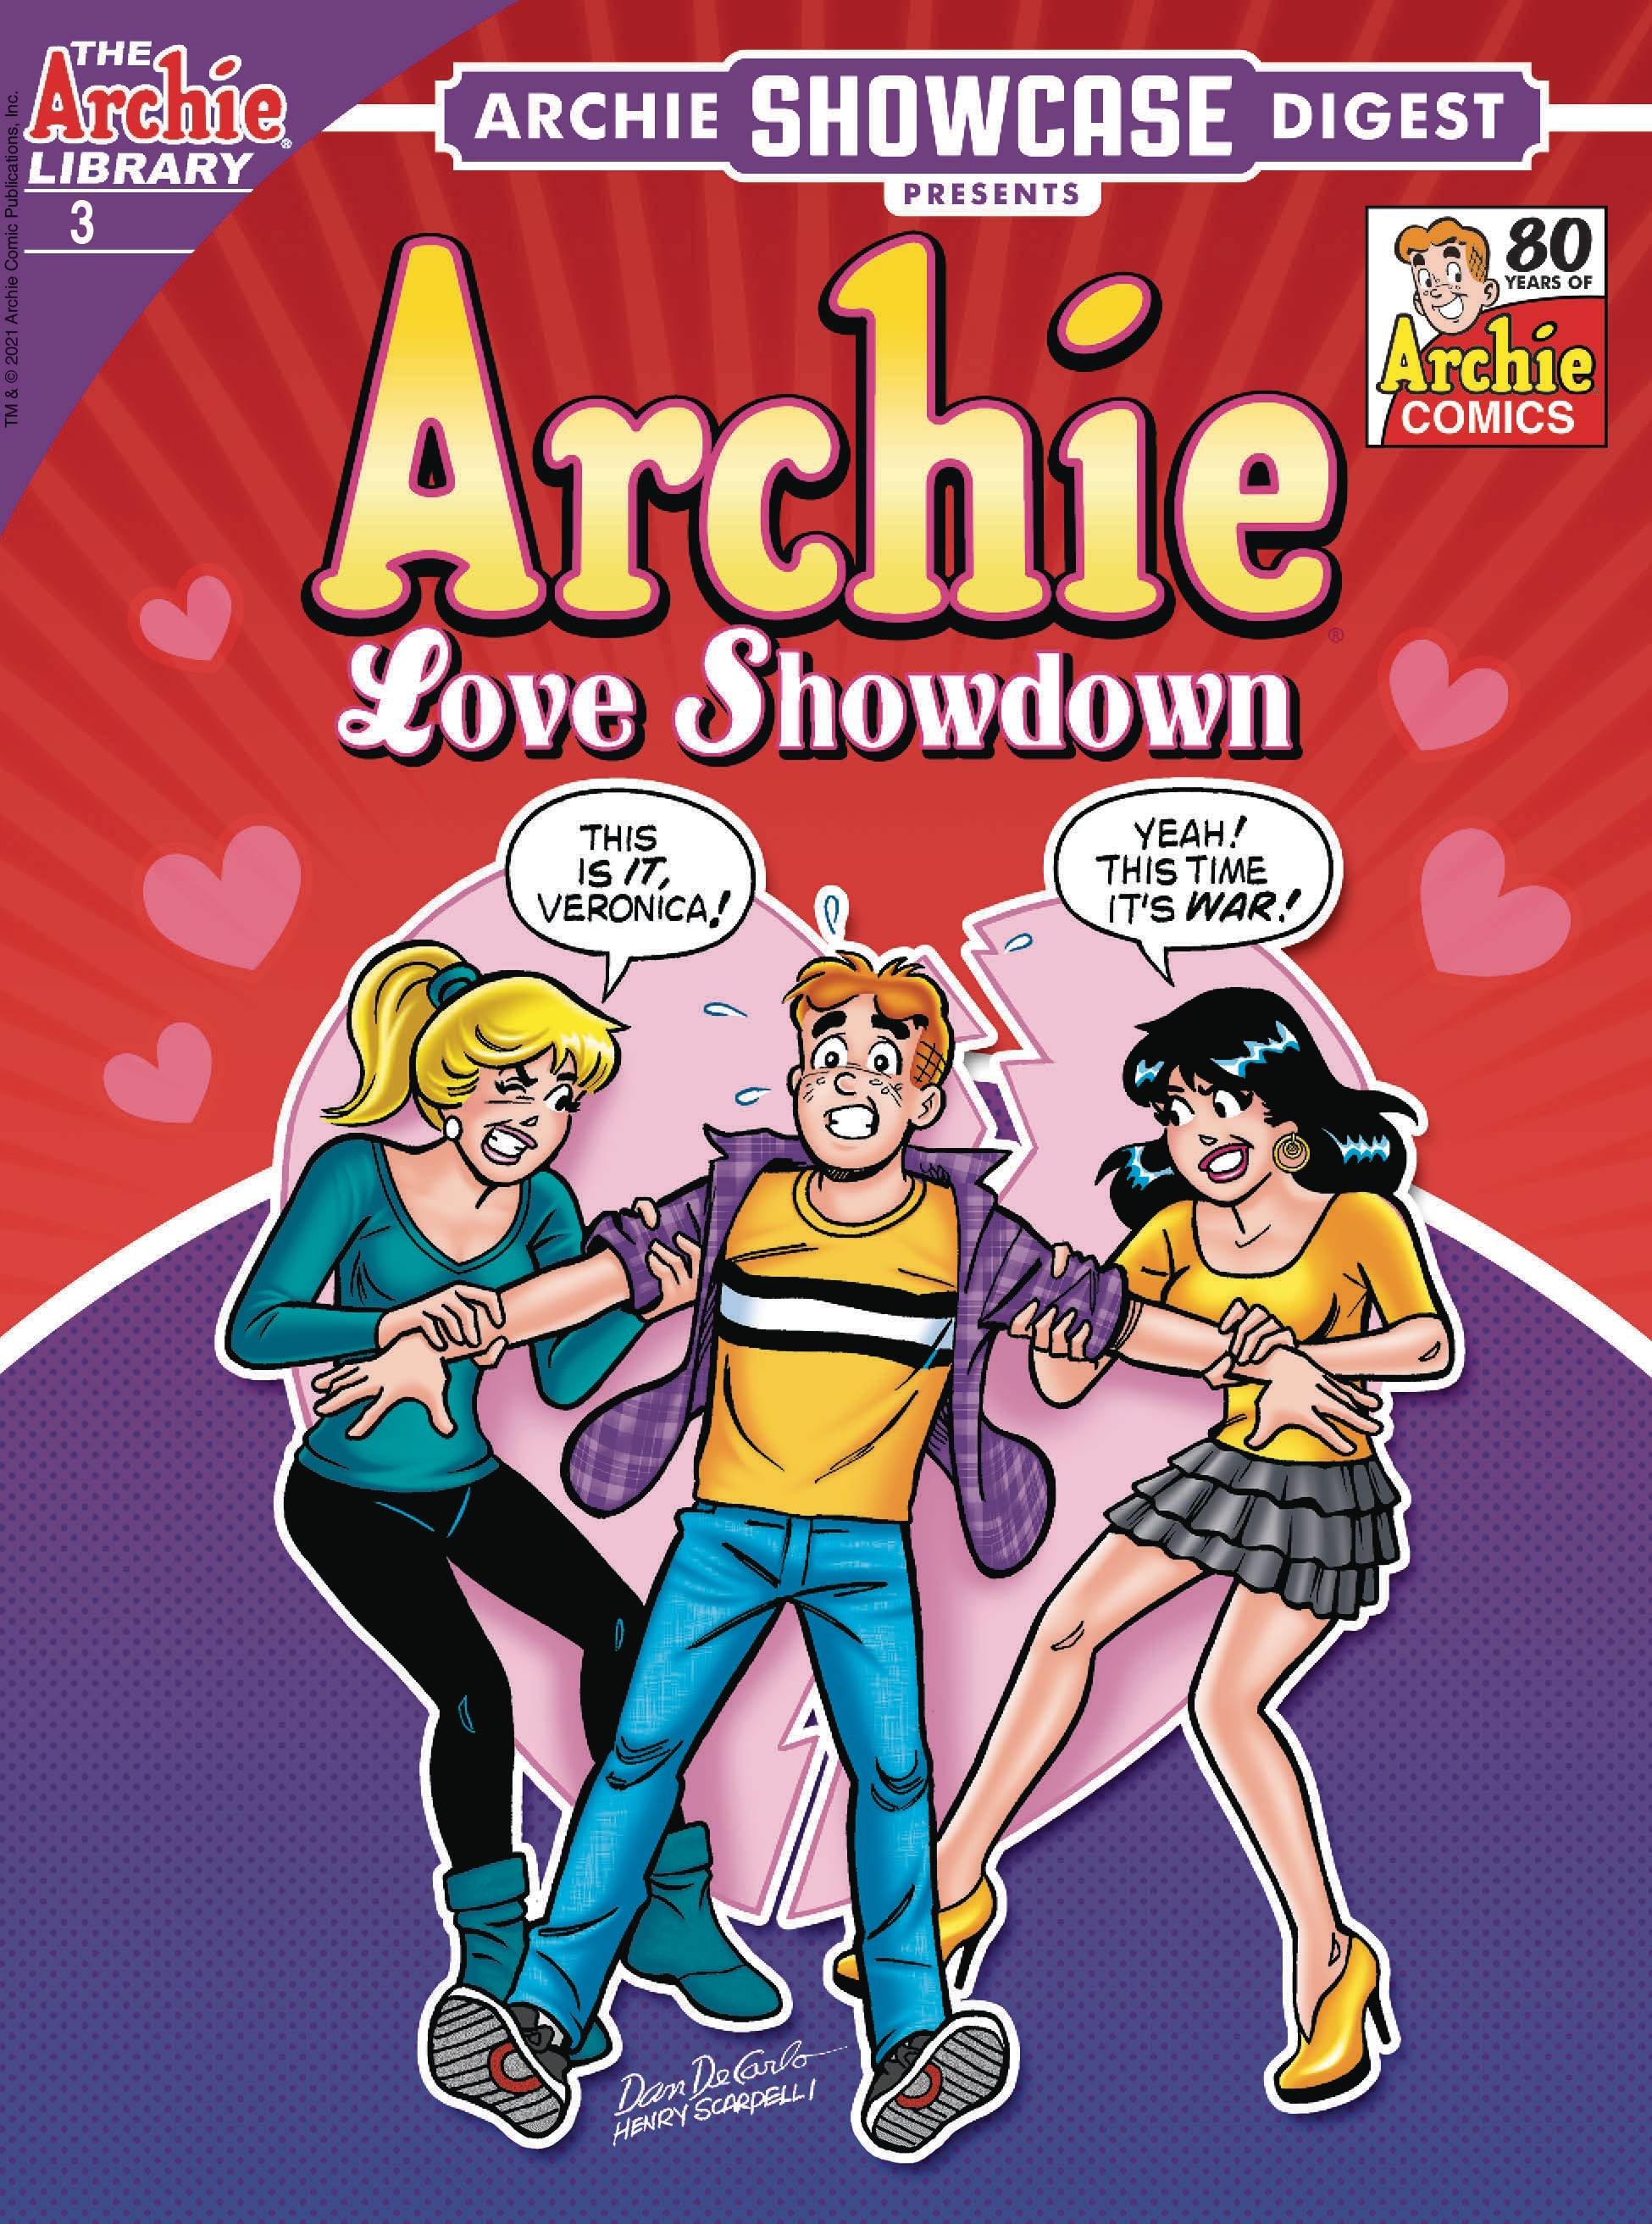 ARCHIE SHOWCASE DIGEST #3 LOVE SHOWDOWN | Game Master's Emporium (The New GME)